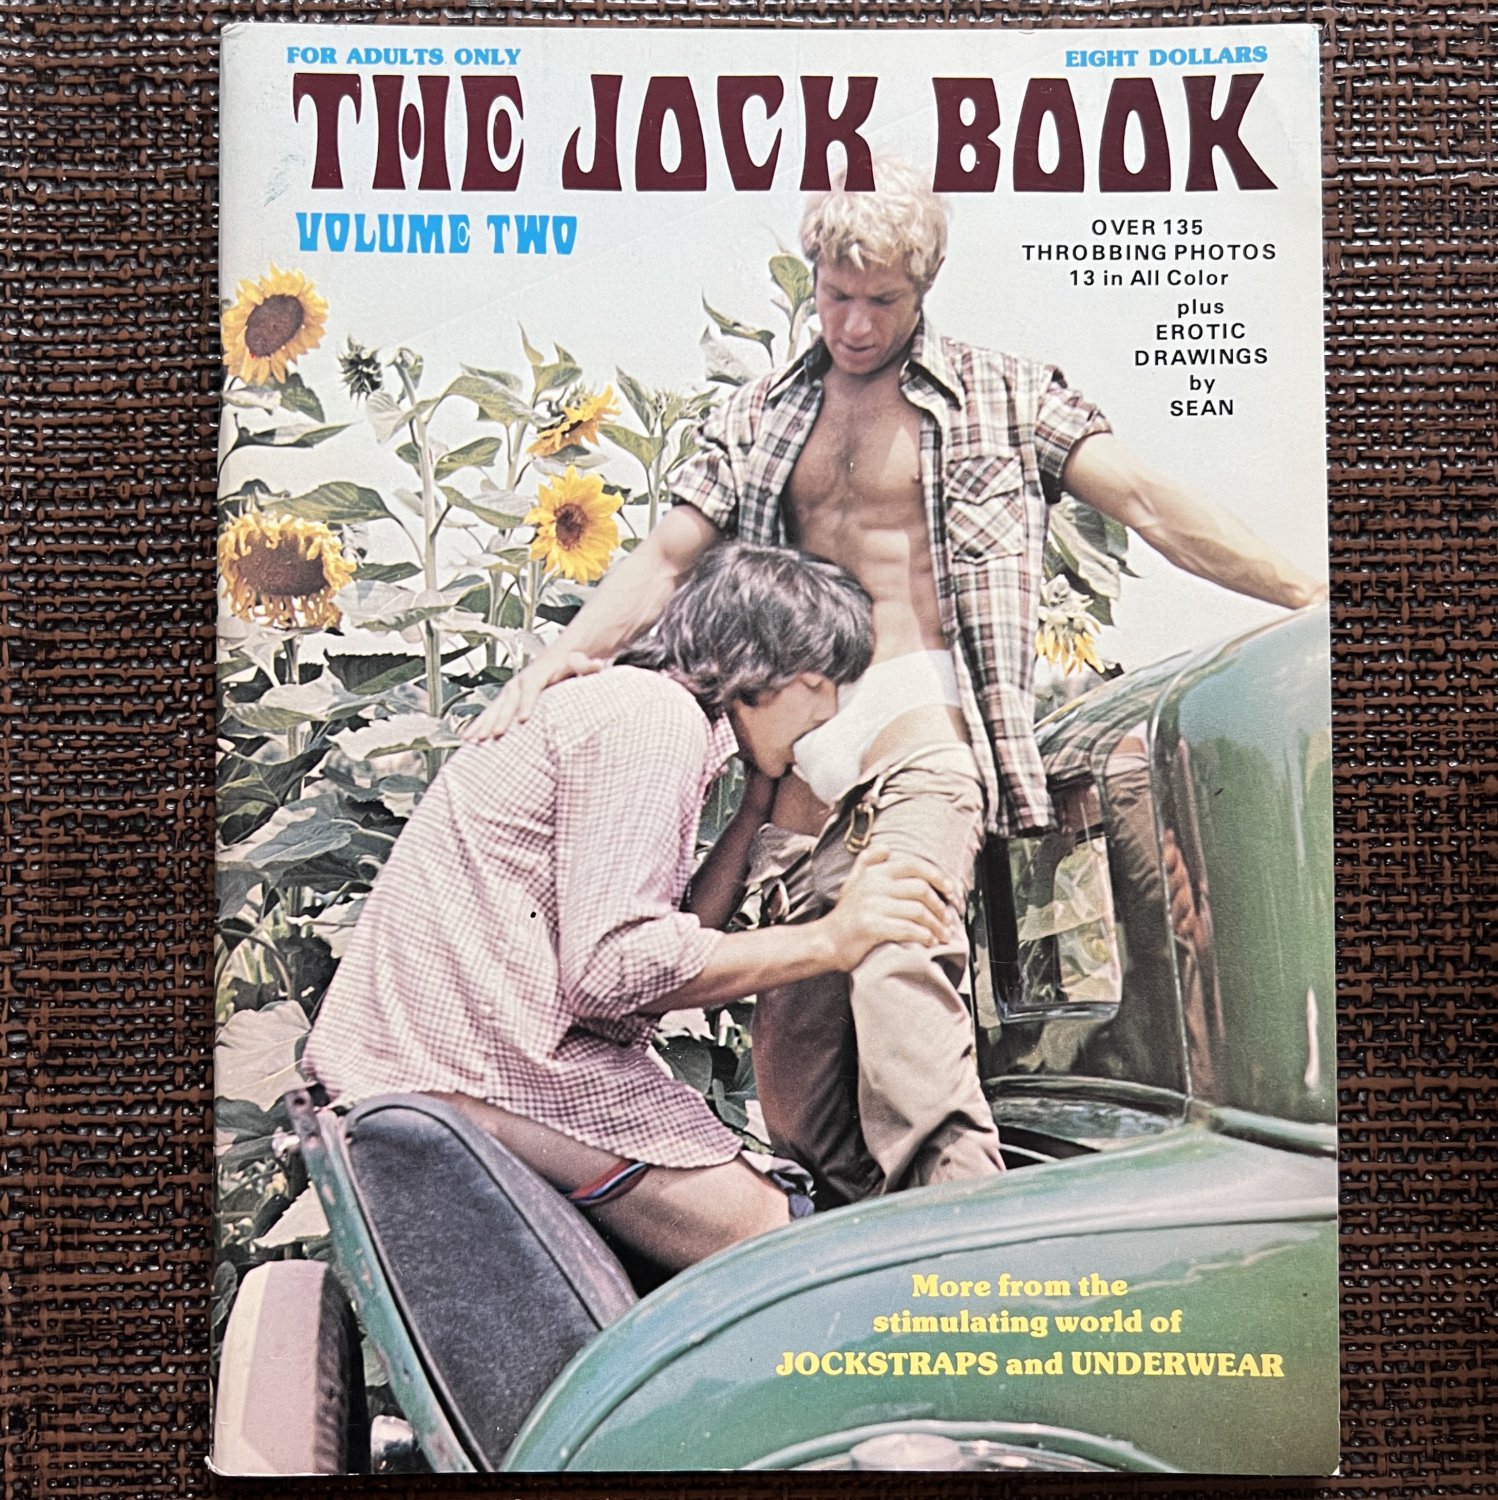 [dead stock] JOCK BOOK #2 (1980) NOVA NEBULA Art SEAN Gay Vintage Muscle Male Nudes Magazine Chicken